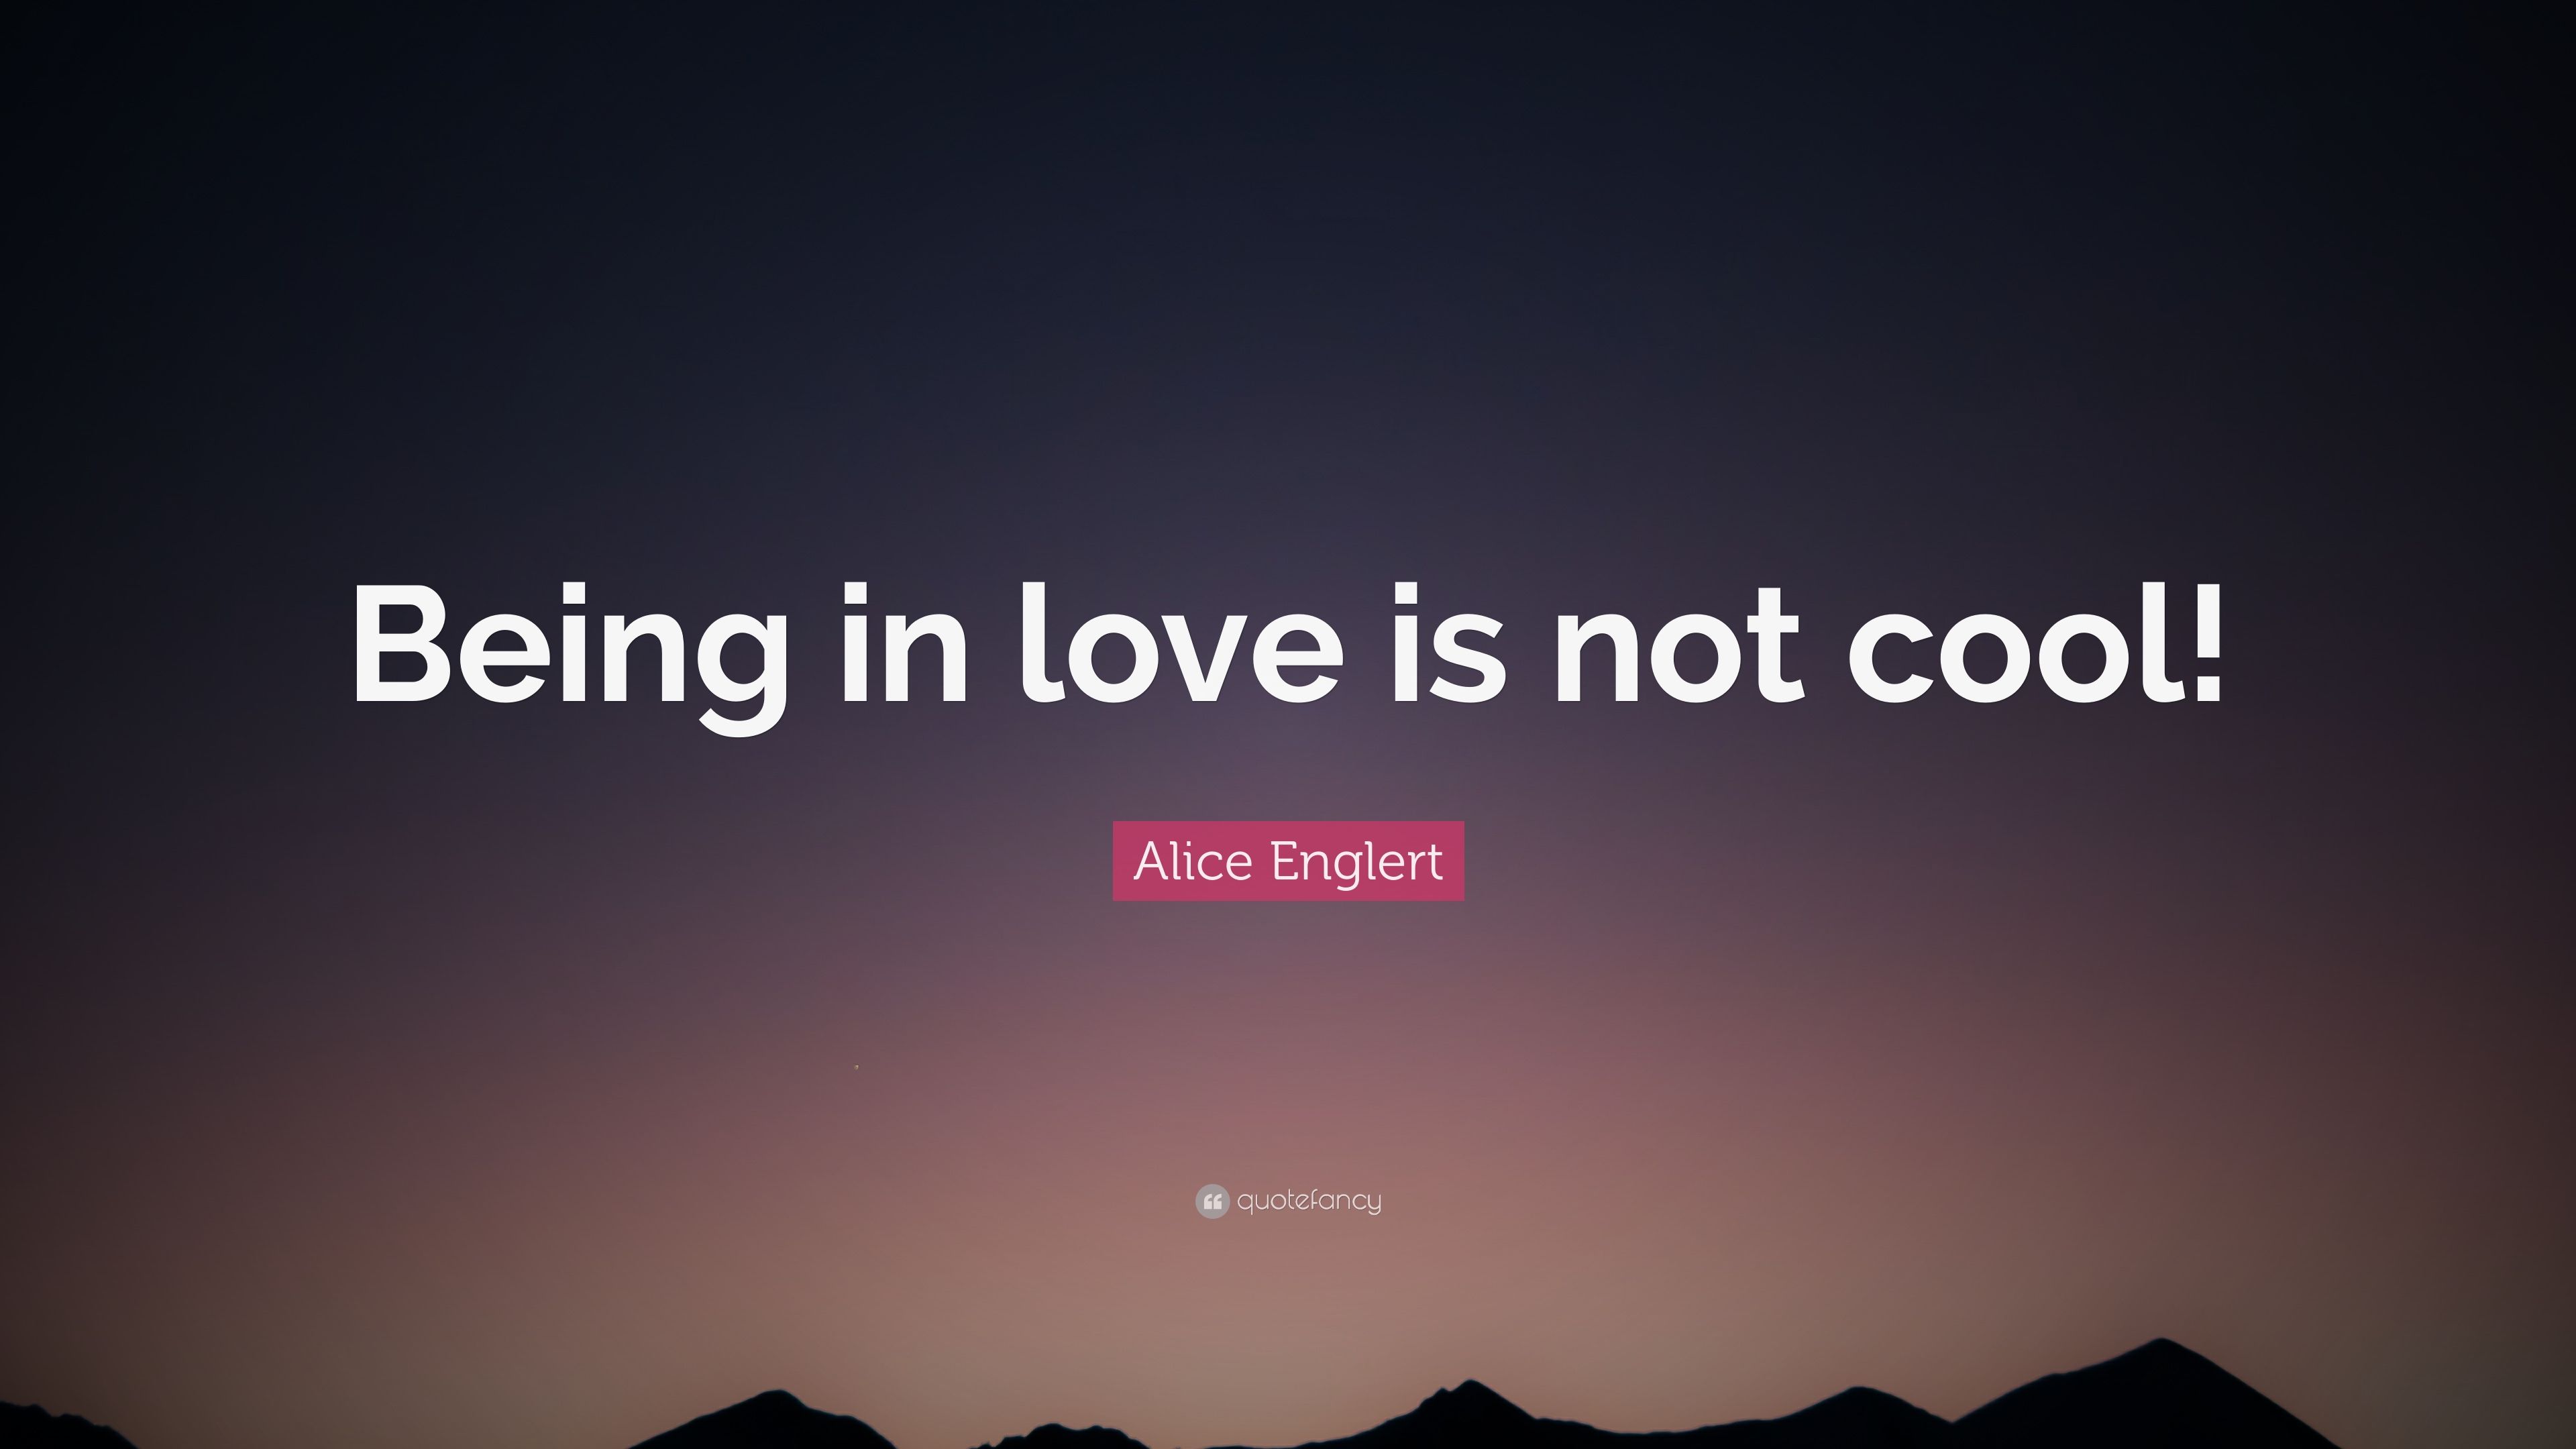 Alice Englert Quote: “Being in love is not cool!” 7 wallpaper